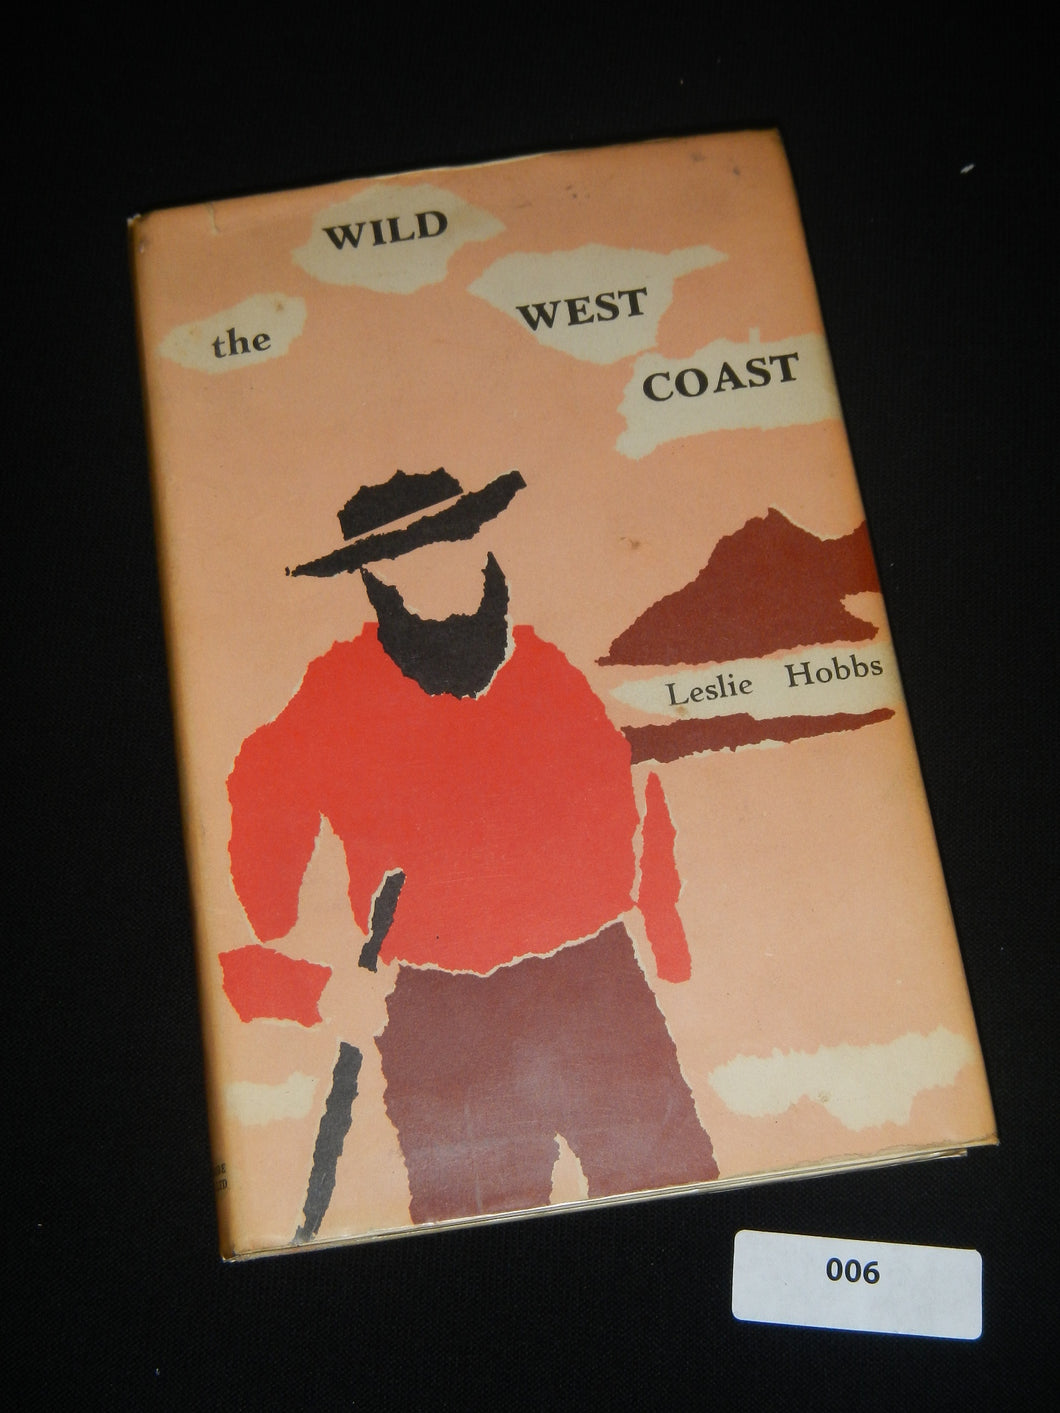 006 The Wild West Coast by Leslie Hobbs